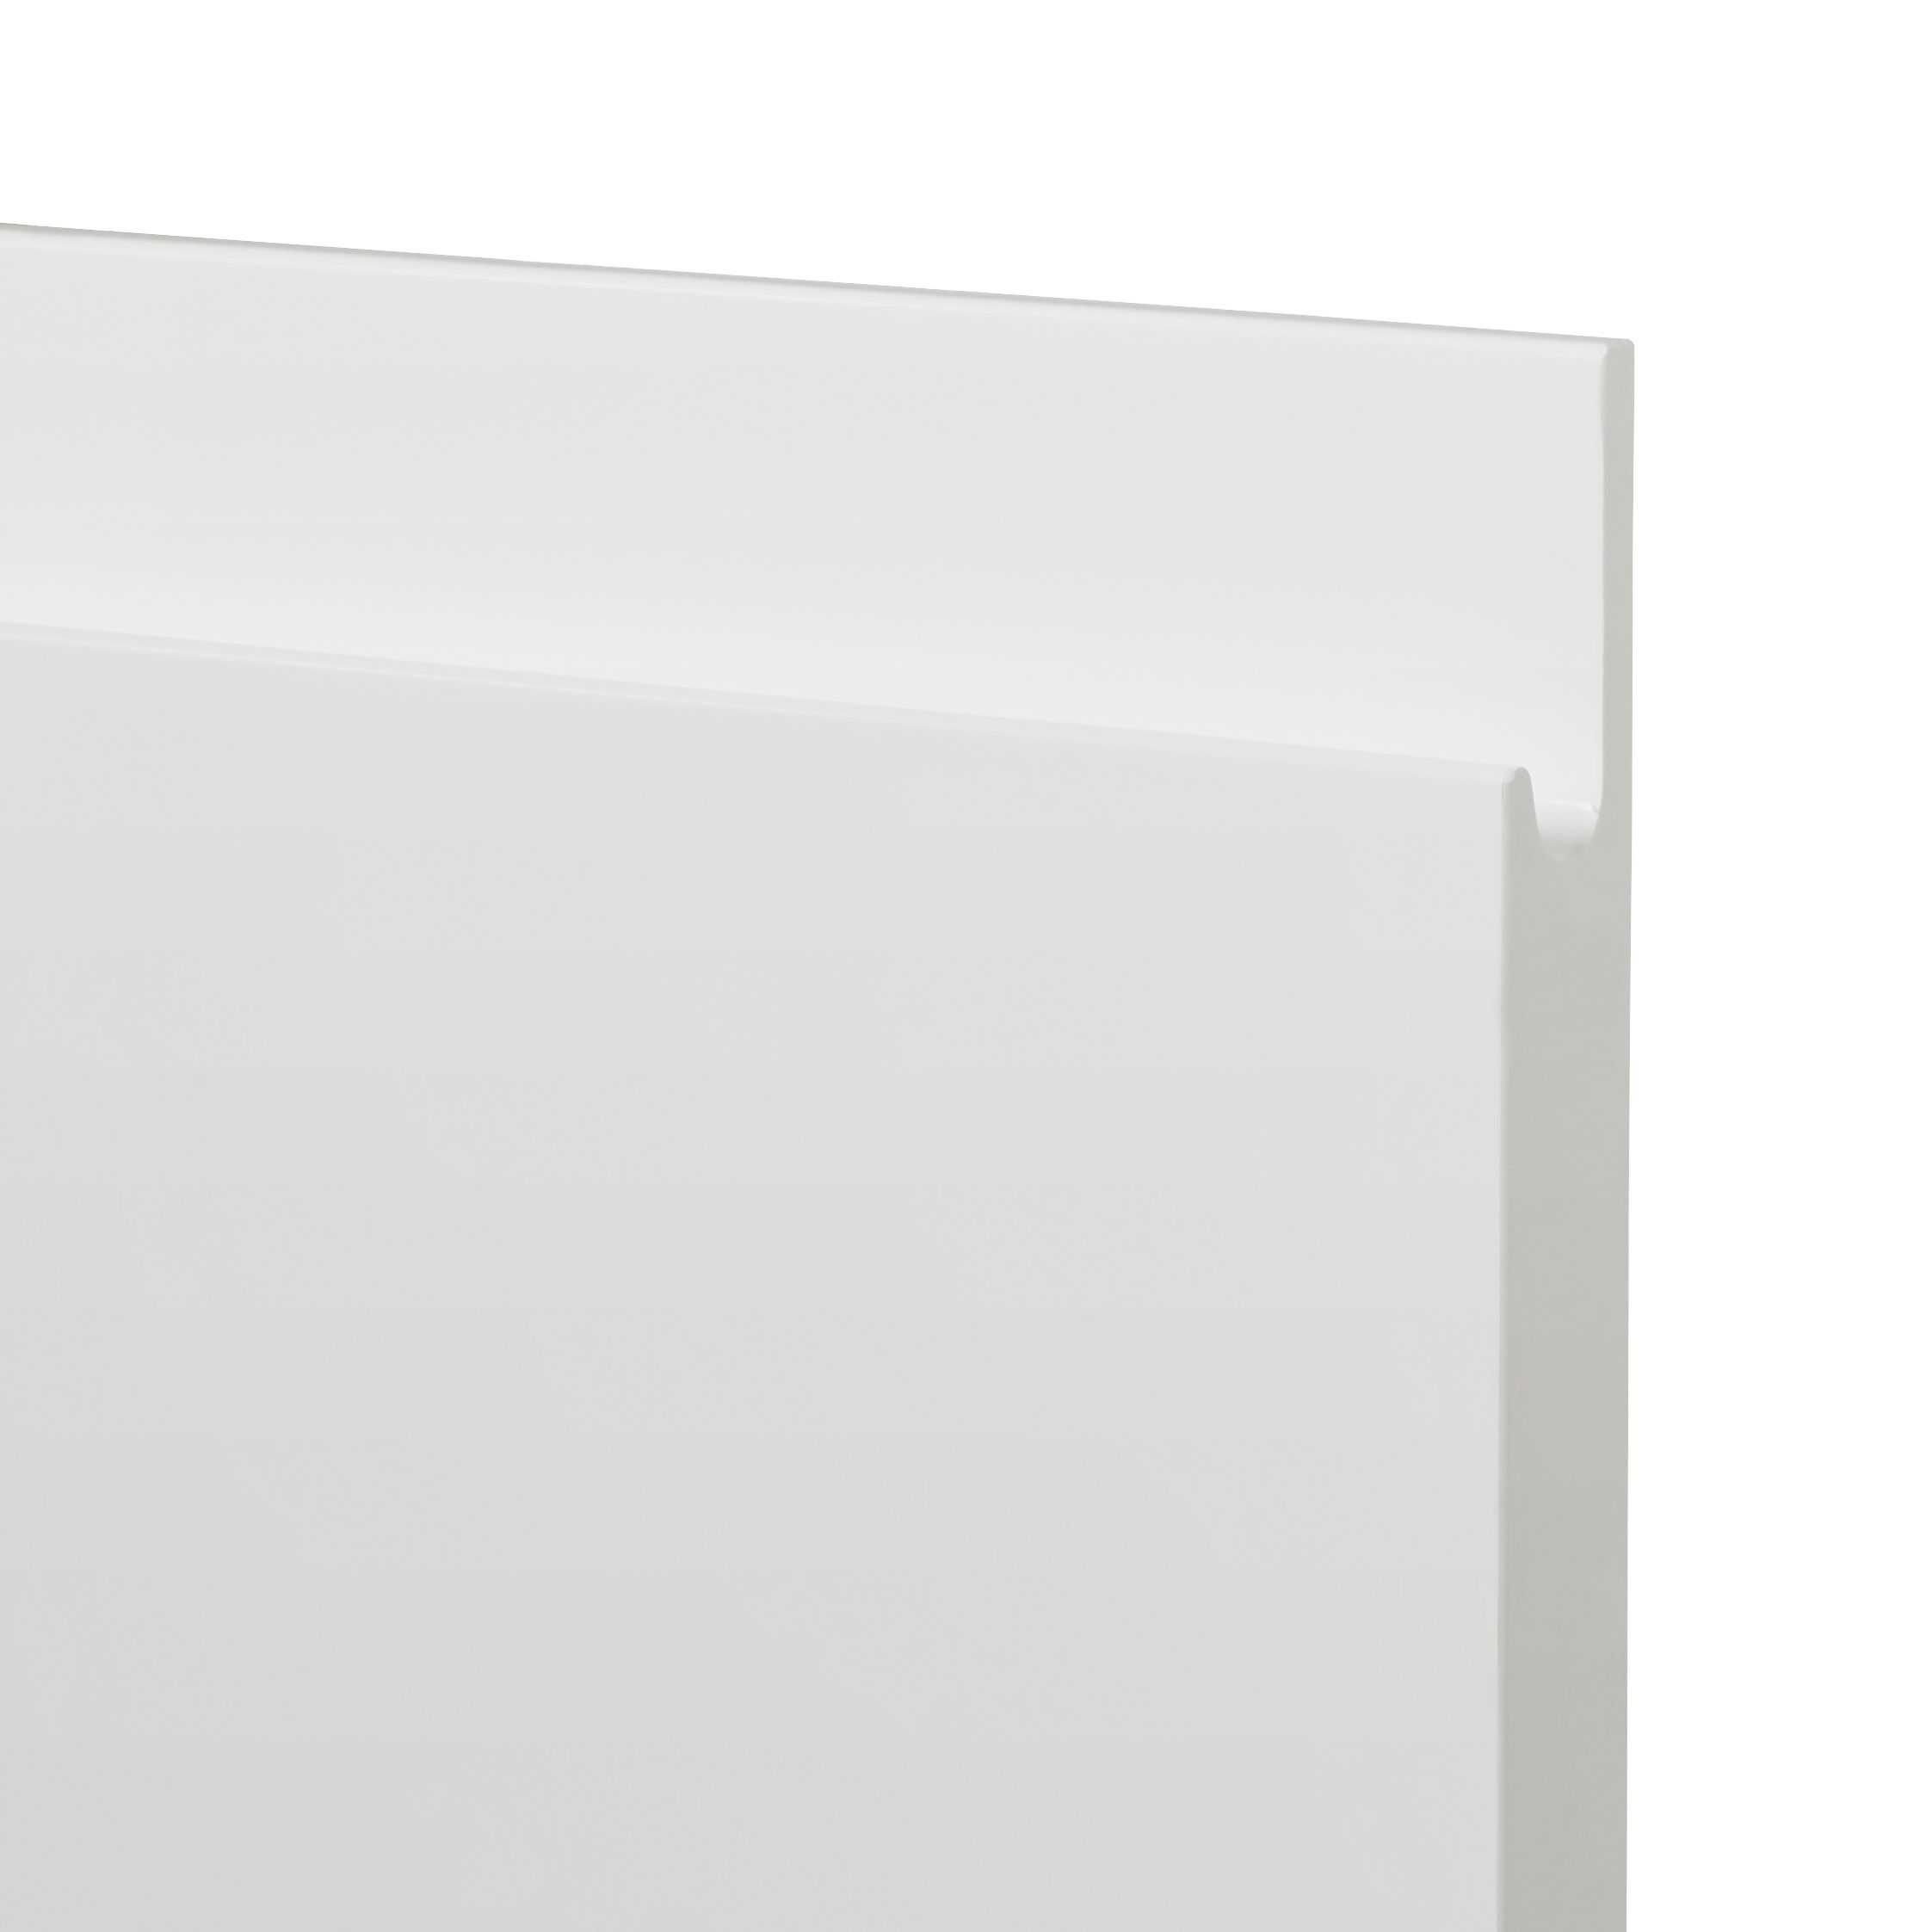 GoodHome Garcinia Gloss white Drawer front, bridging door & bi fold door, (W)600mm (H)356mm (T)19mm